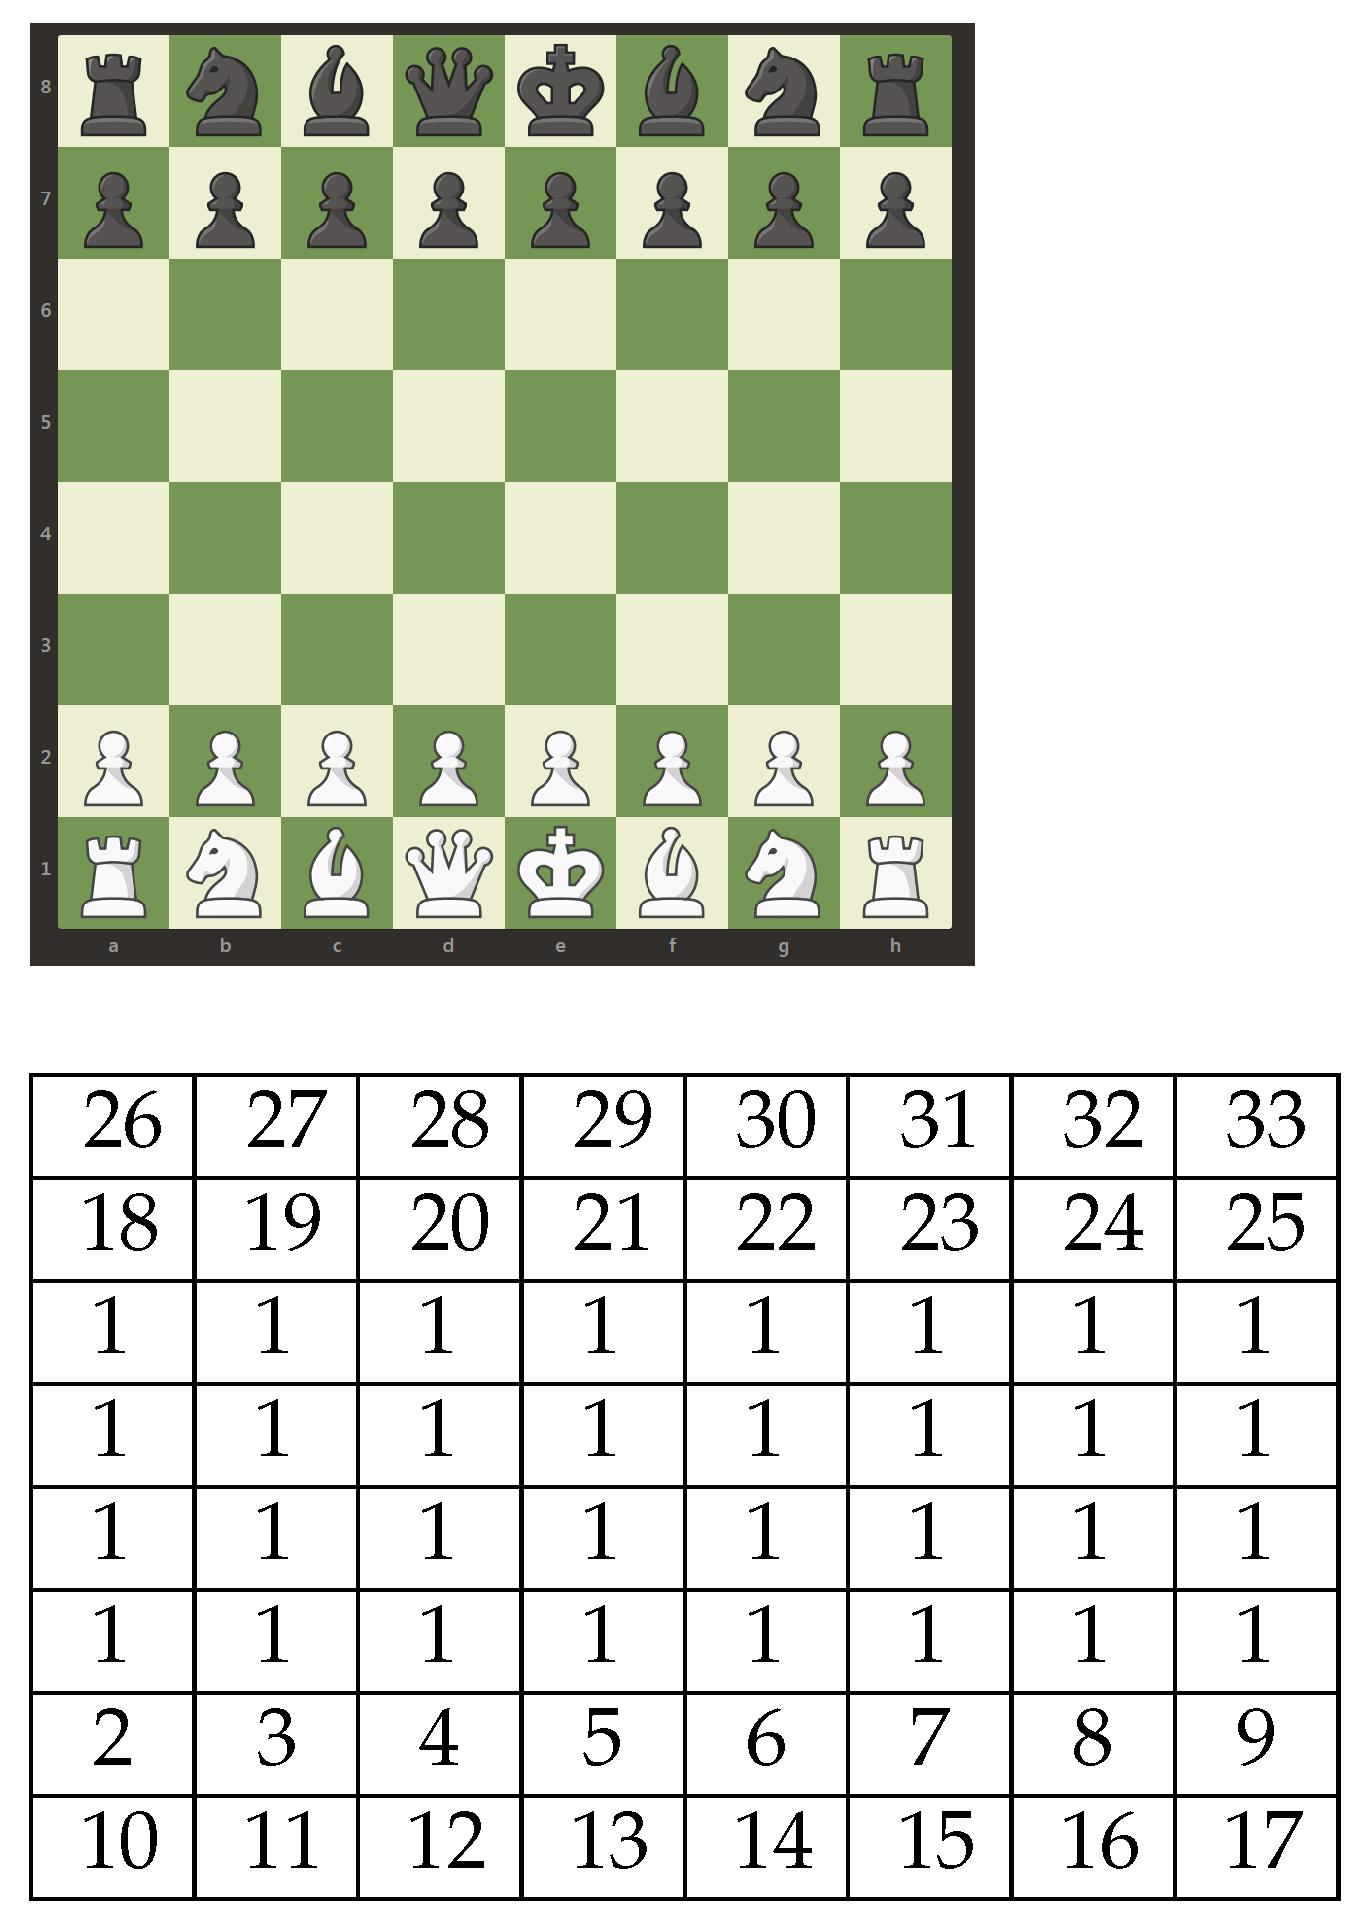 An interesting chess set Oh wait : r/memes